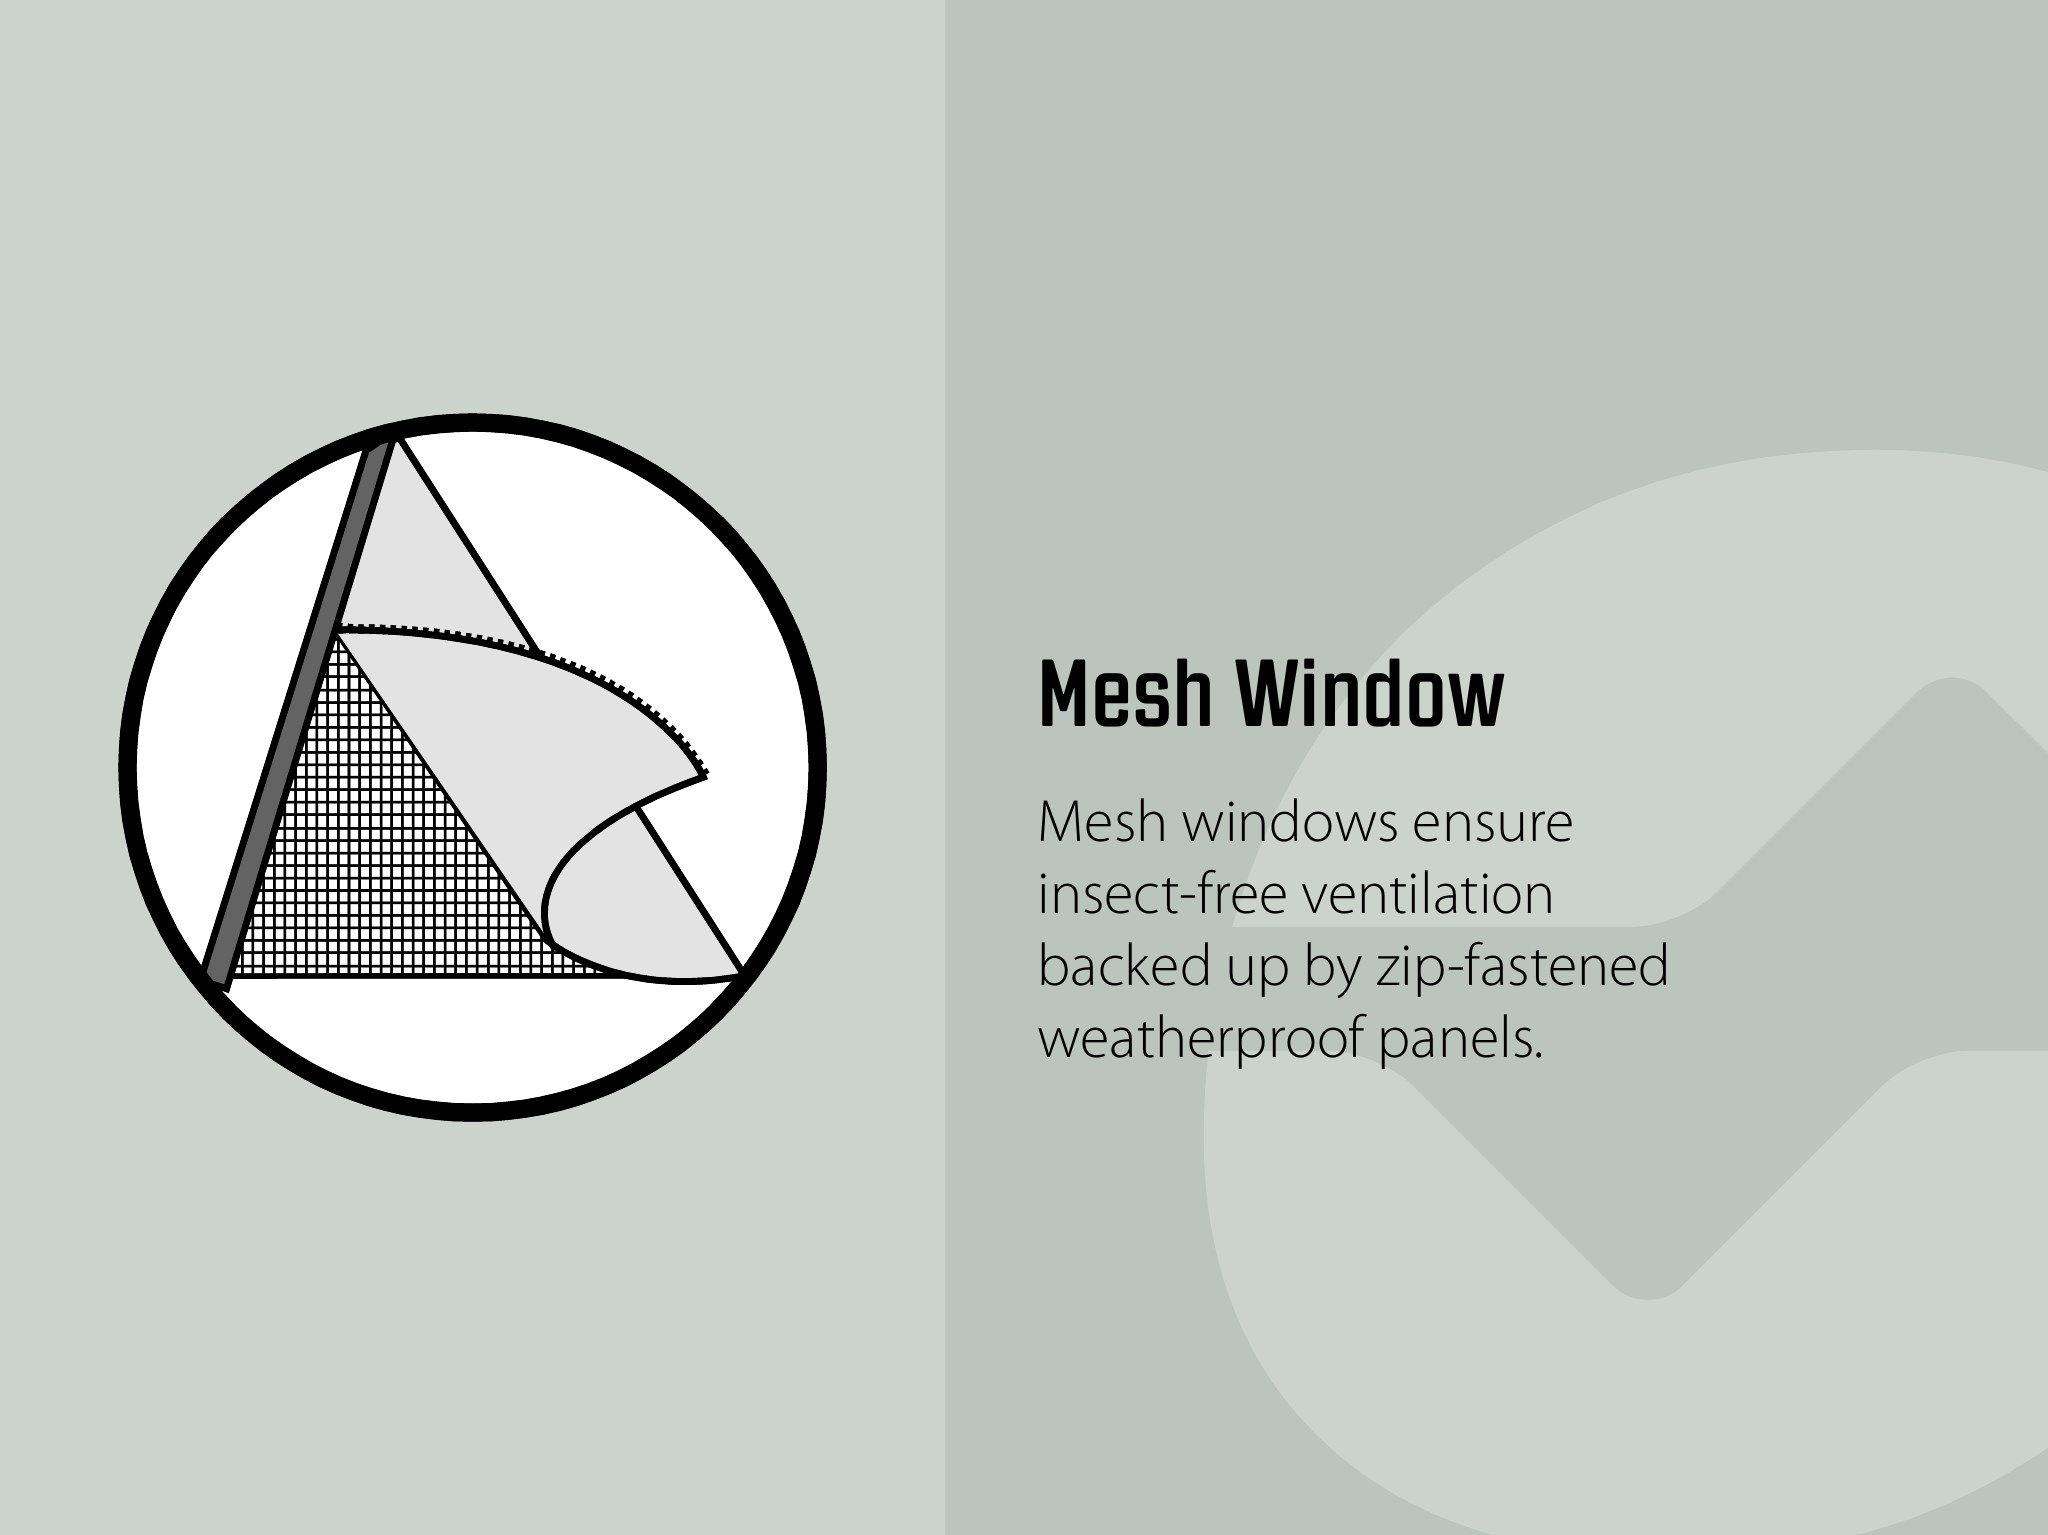 Mesh Windows